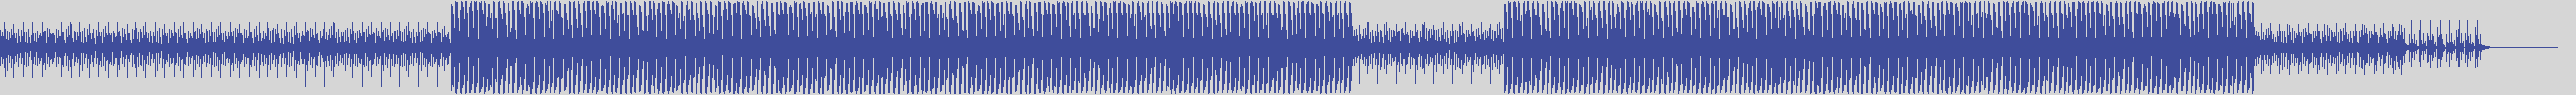 nf_boyz_records [NFY014] Dj Bum Bum - Multitrax [Extended Mix] audio wave form